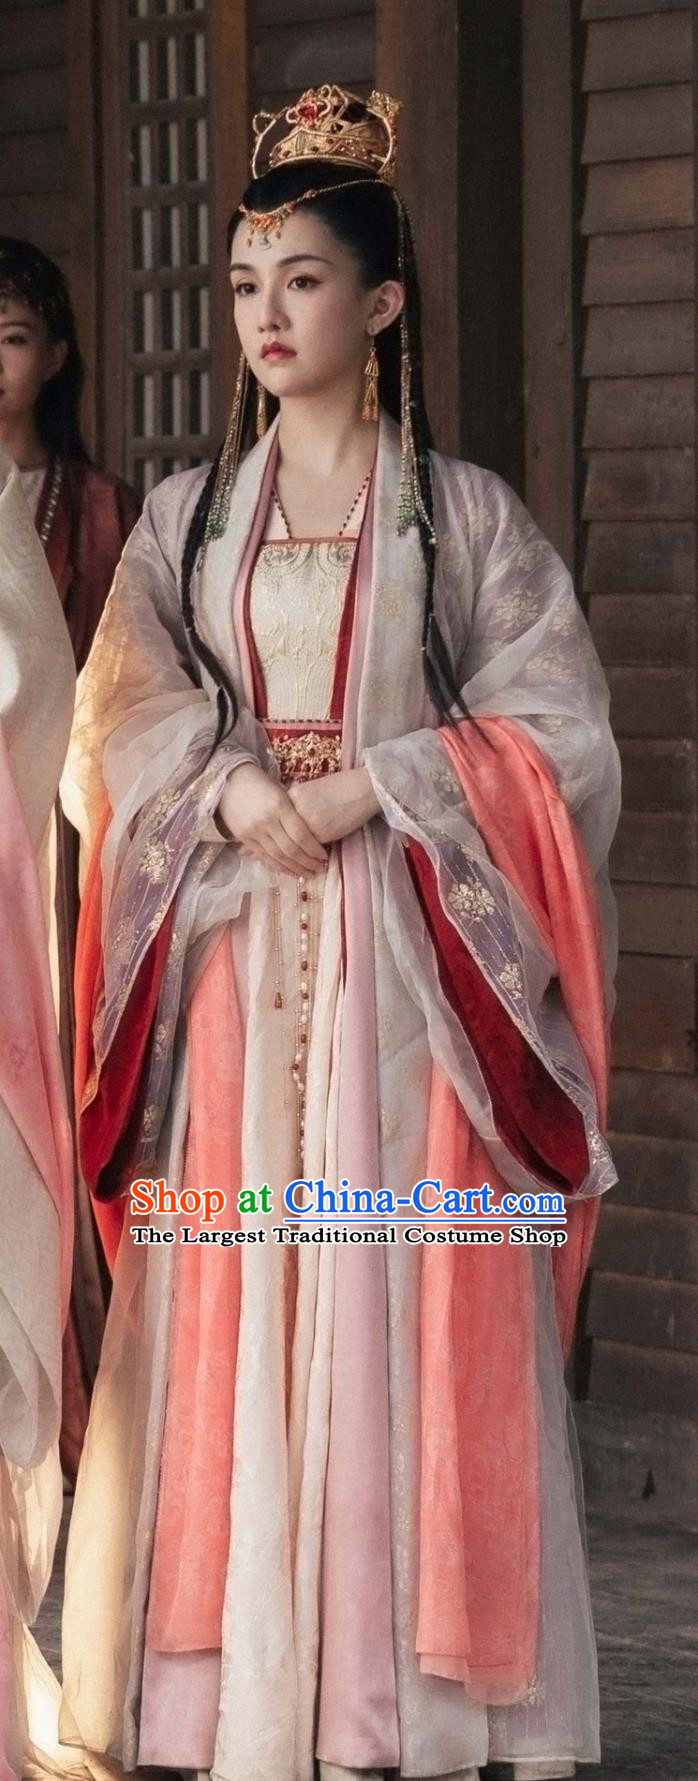 China Ancient Court Lady Costumes TV Drama The Legend of Zhuohua Western Regions Princess Dress